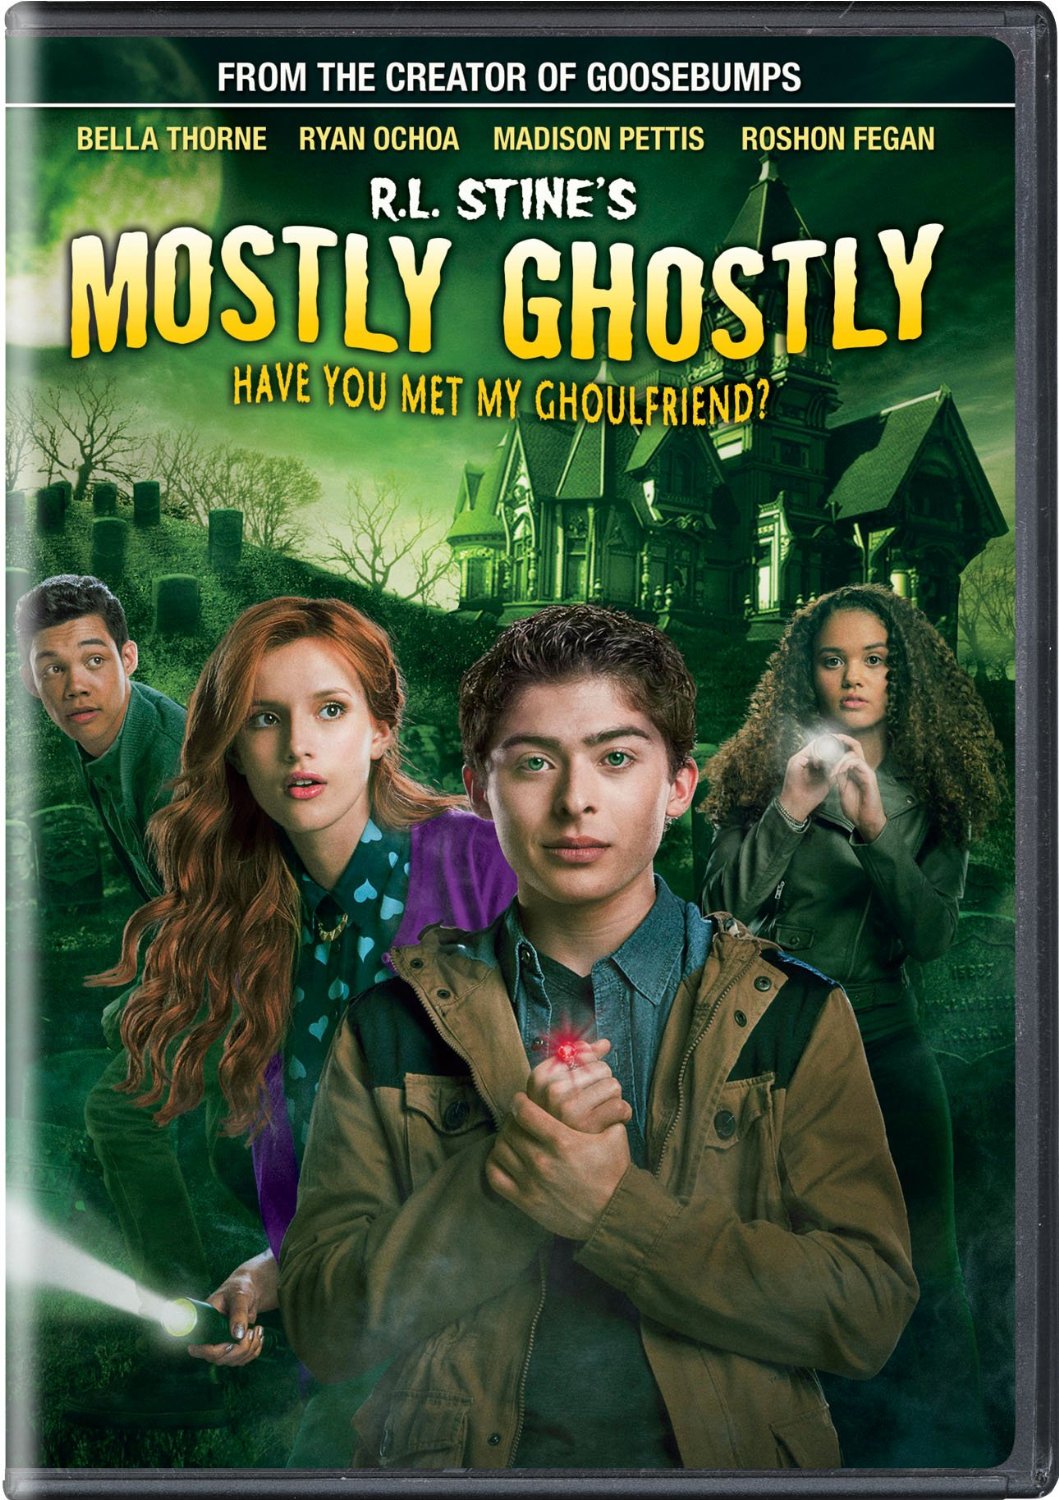 Ryan Ochoa in Mostly Ghostly: Have You Met My Ghoulfriend?